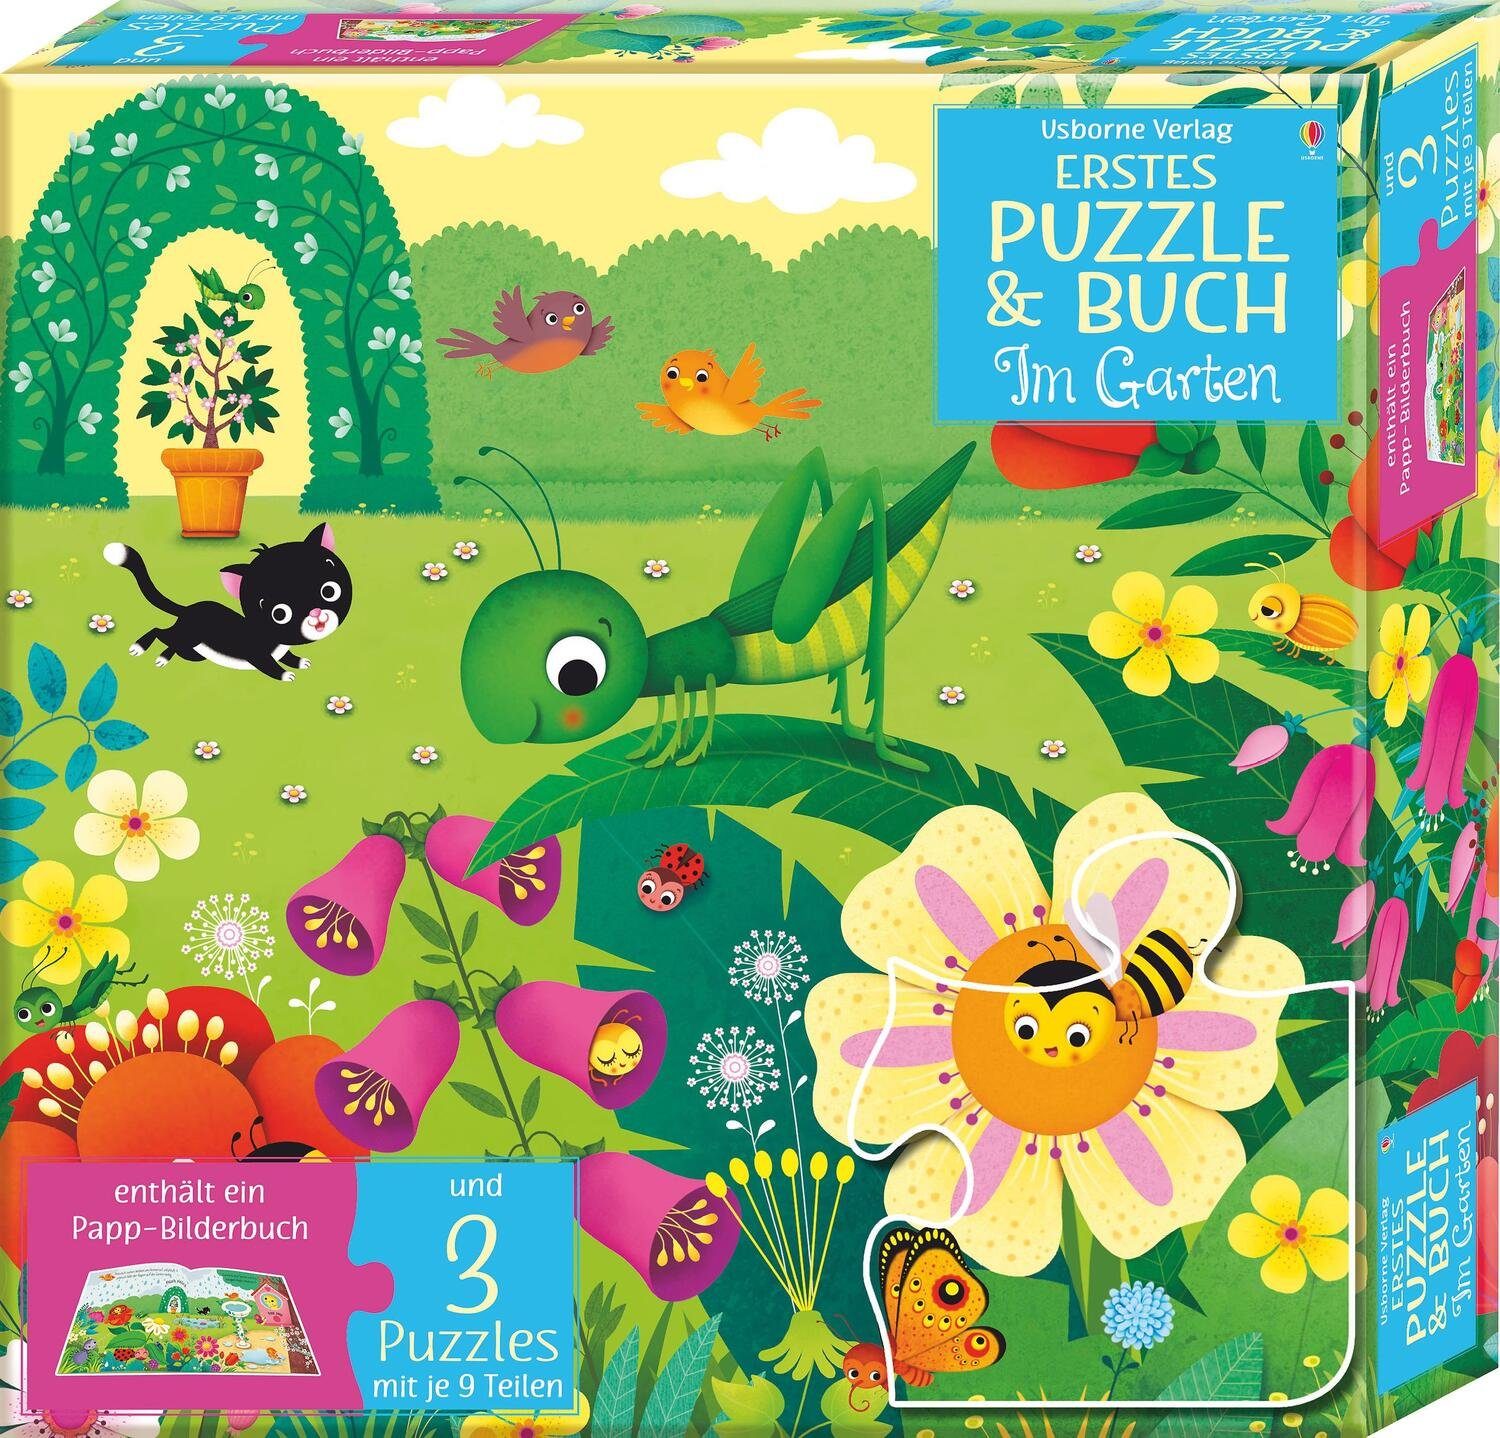 Usborne Verlag Puzzle Erstes Puzzle & Buch: Im Garten, Puzzleteile